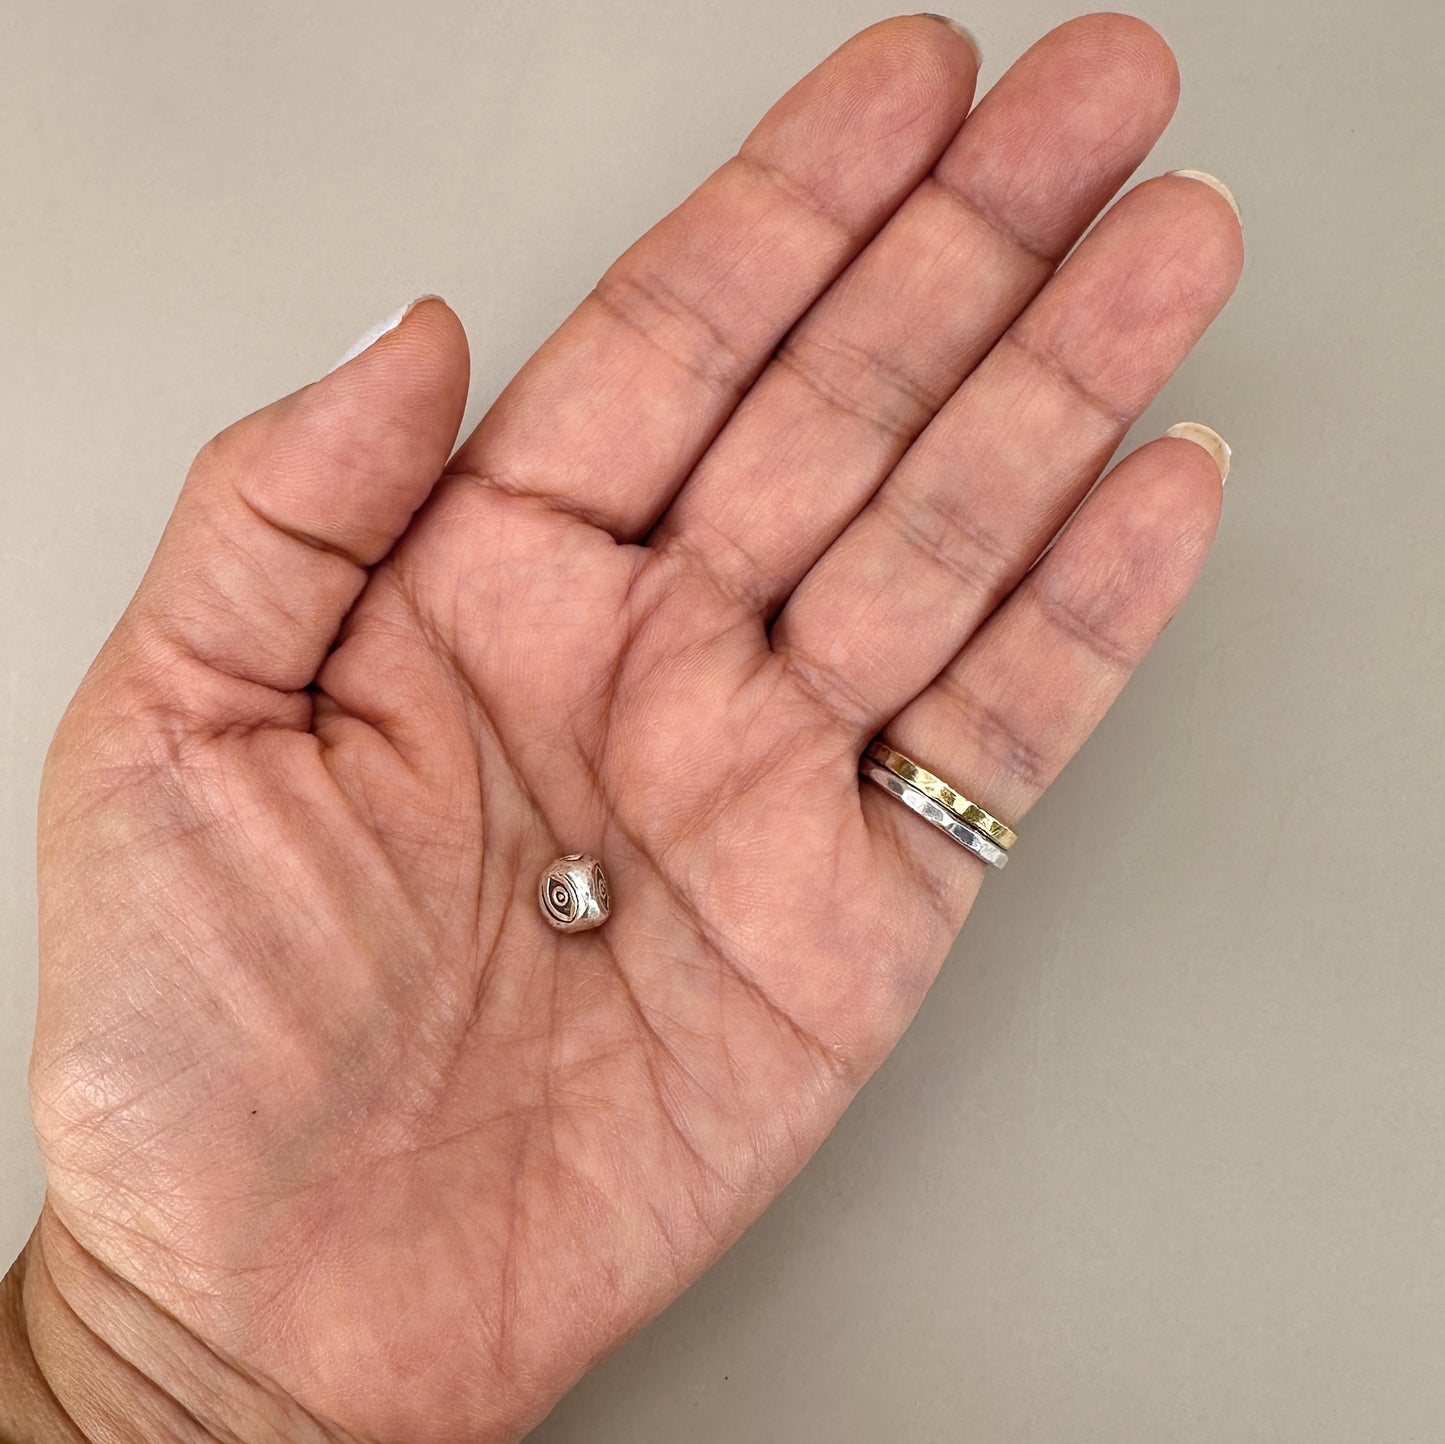 7.5mm Evil Eye Triangle Bead (Thai silver) - 1 pc. (M969)